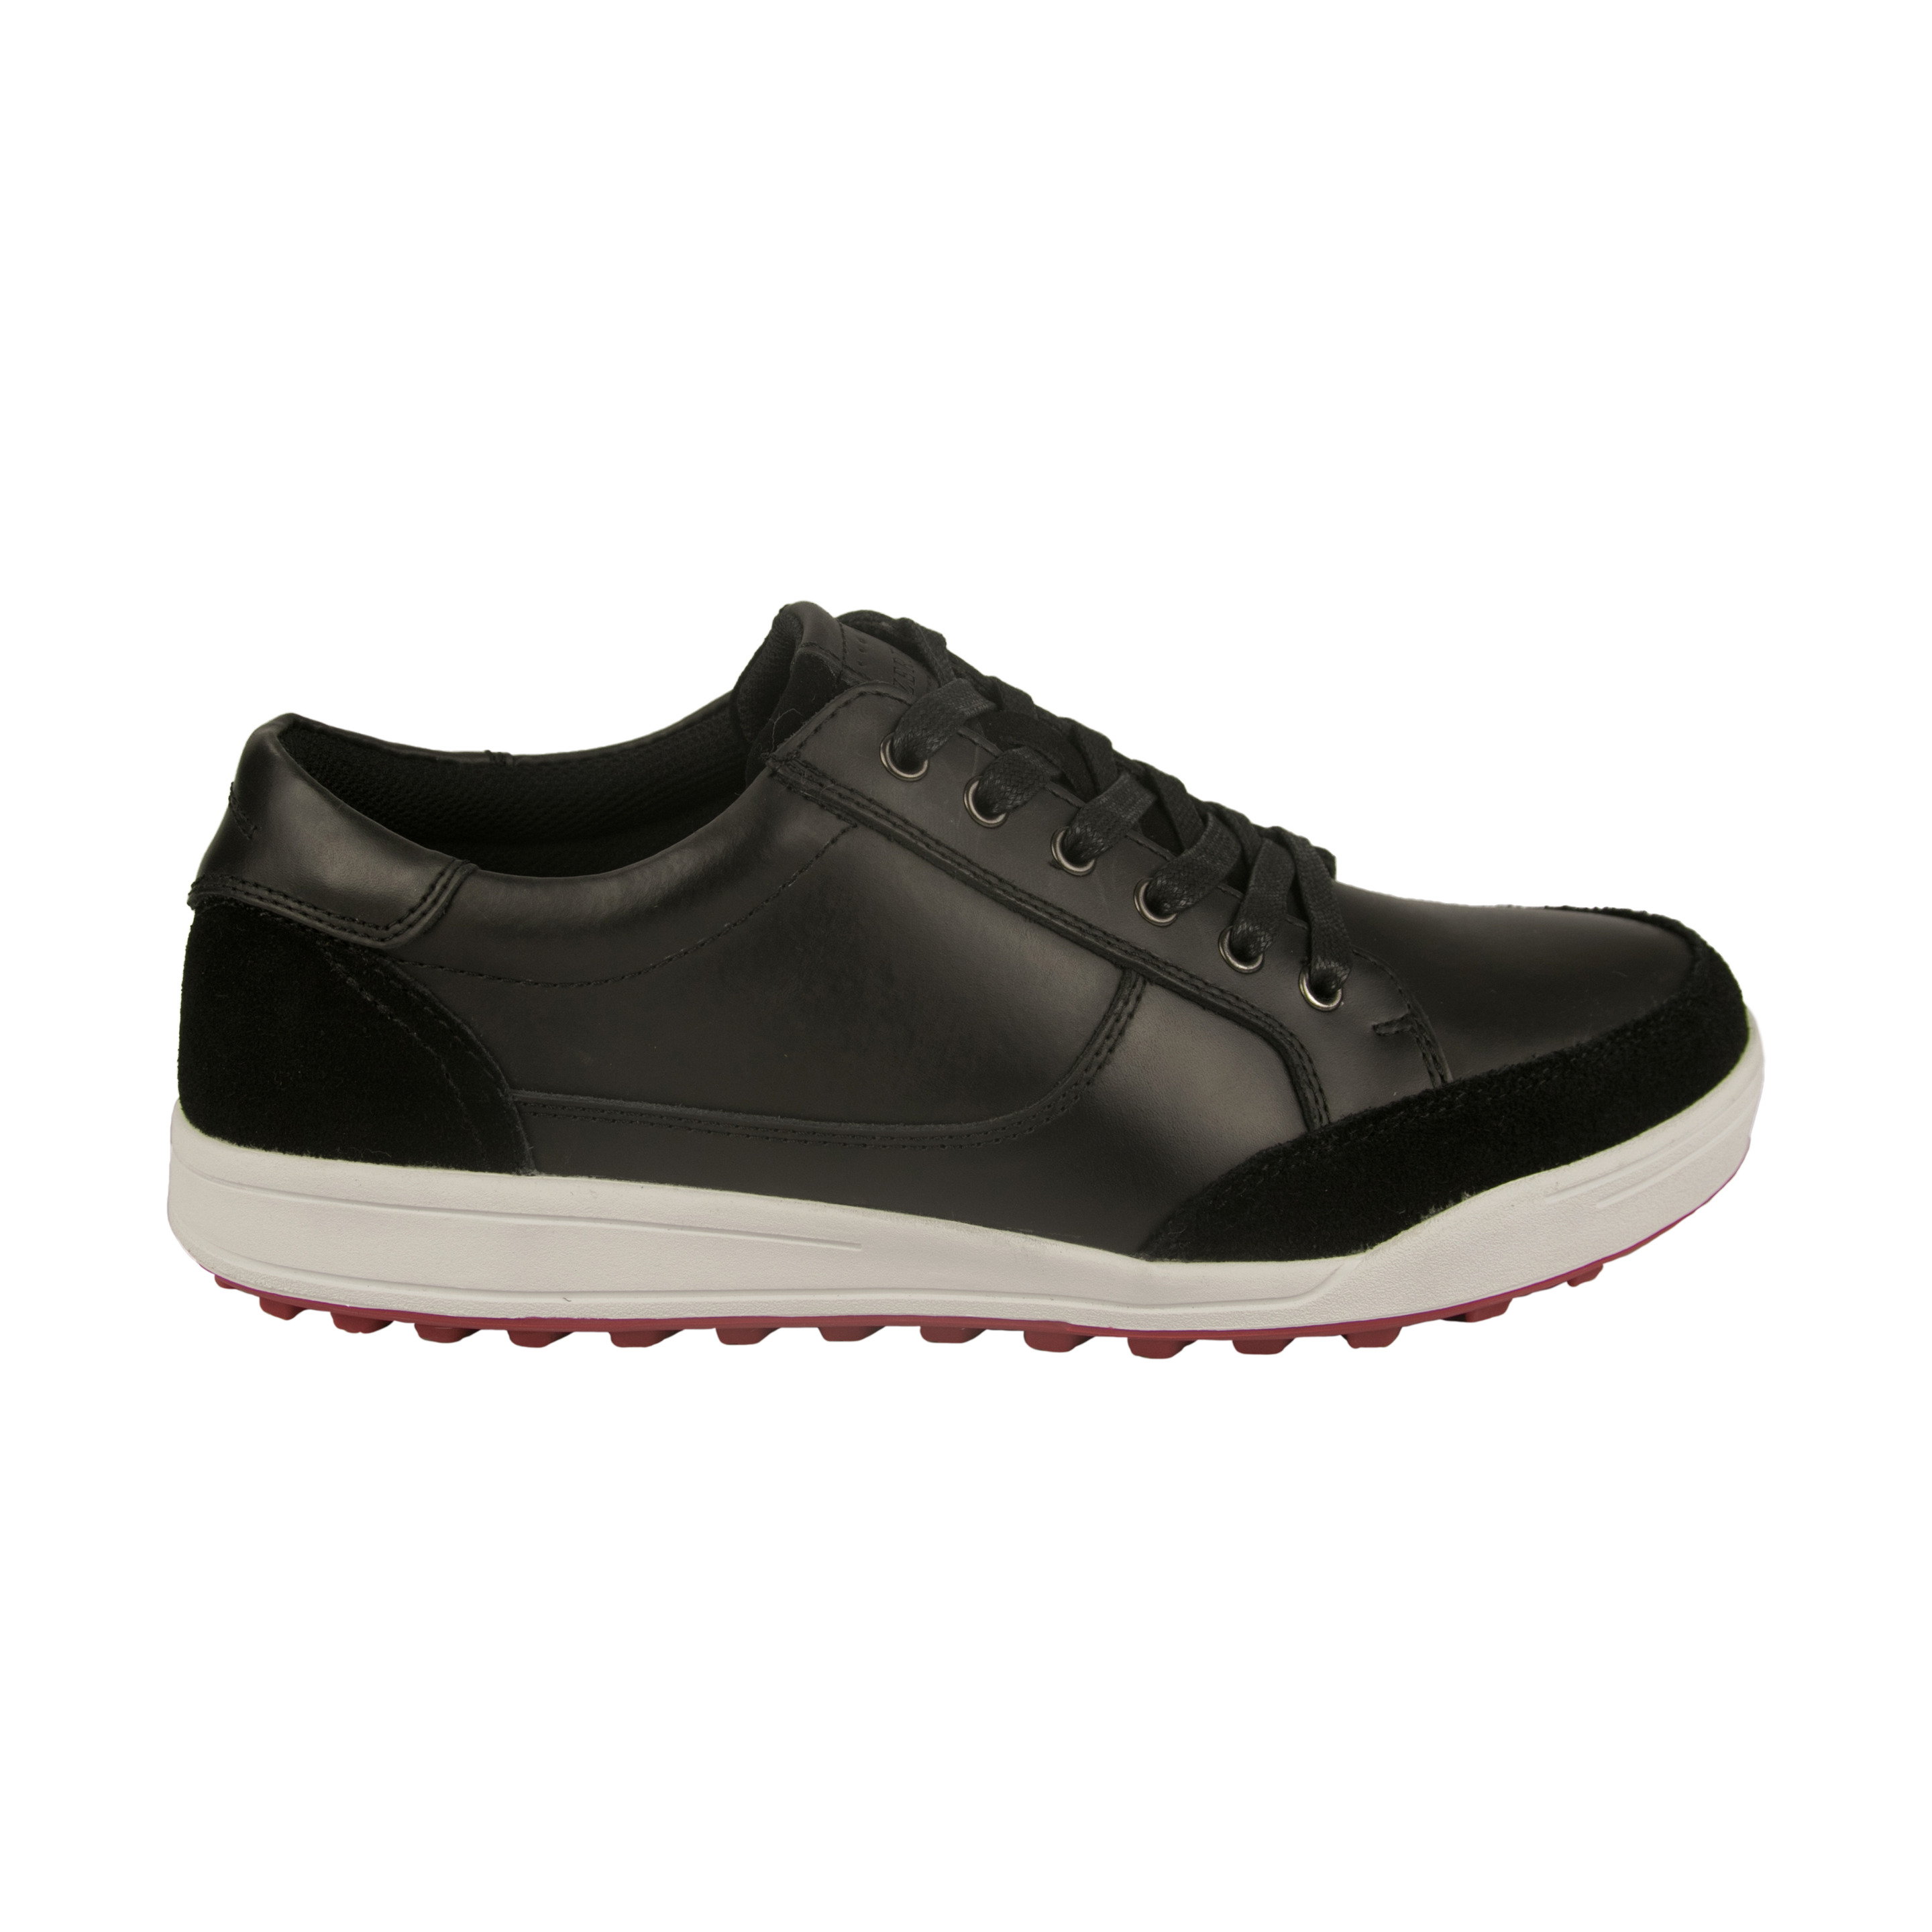 Zerimar Zapatos De Golf Hombre |zapatos Golf Piel | Zapatos Hombre Deportivos | Zapatillas De Golf - negro  MKP